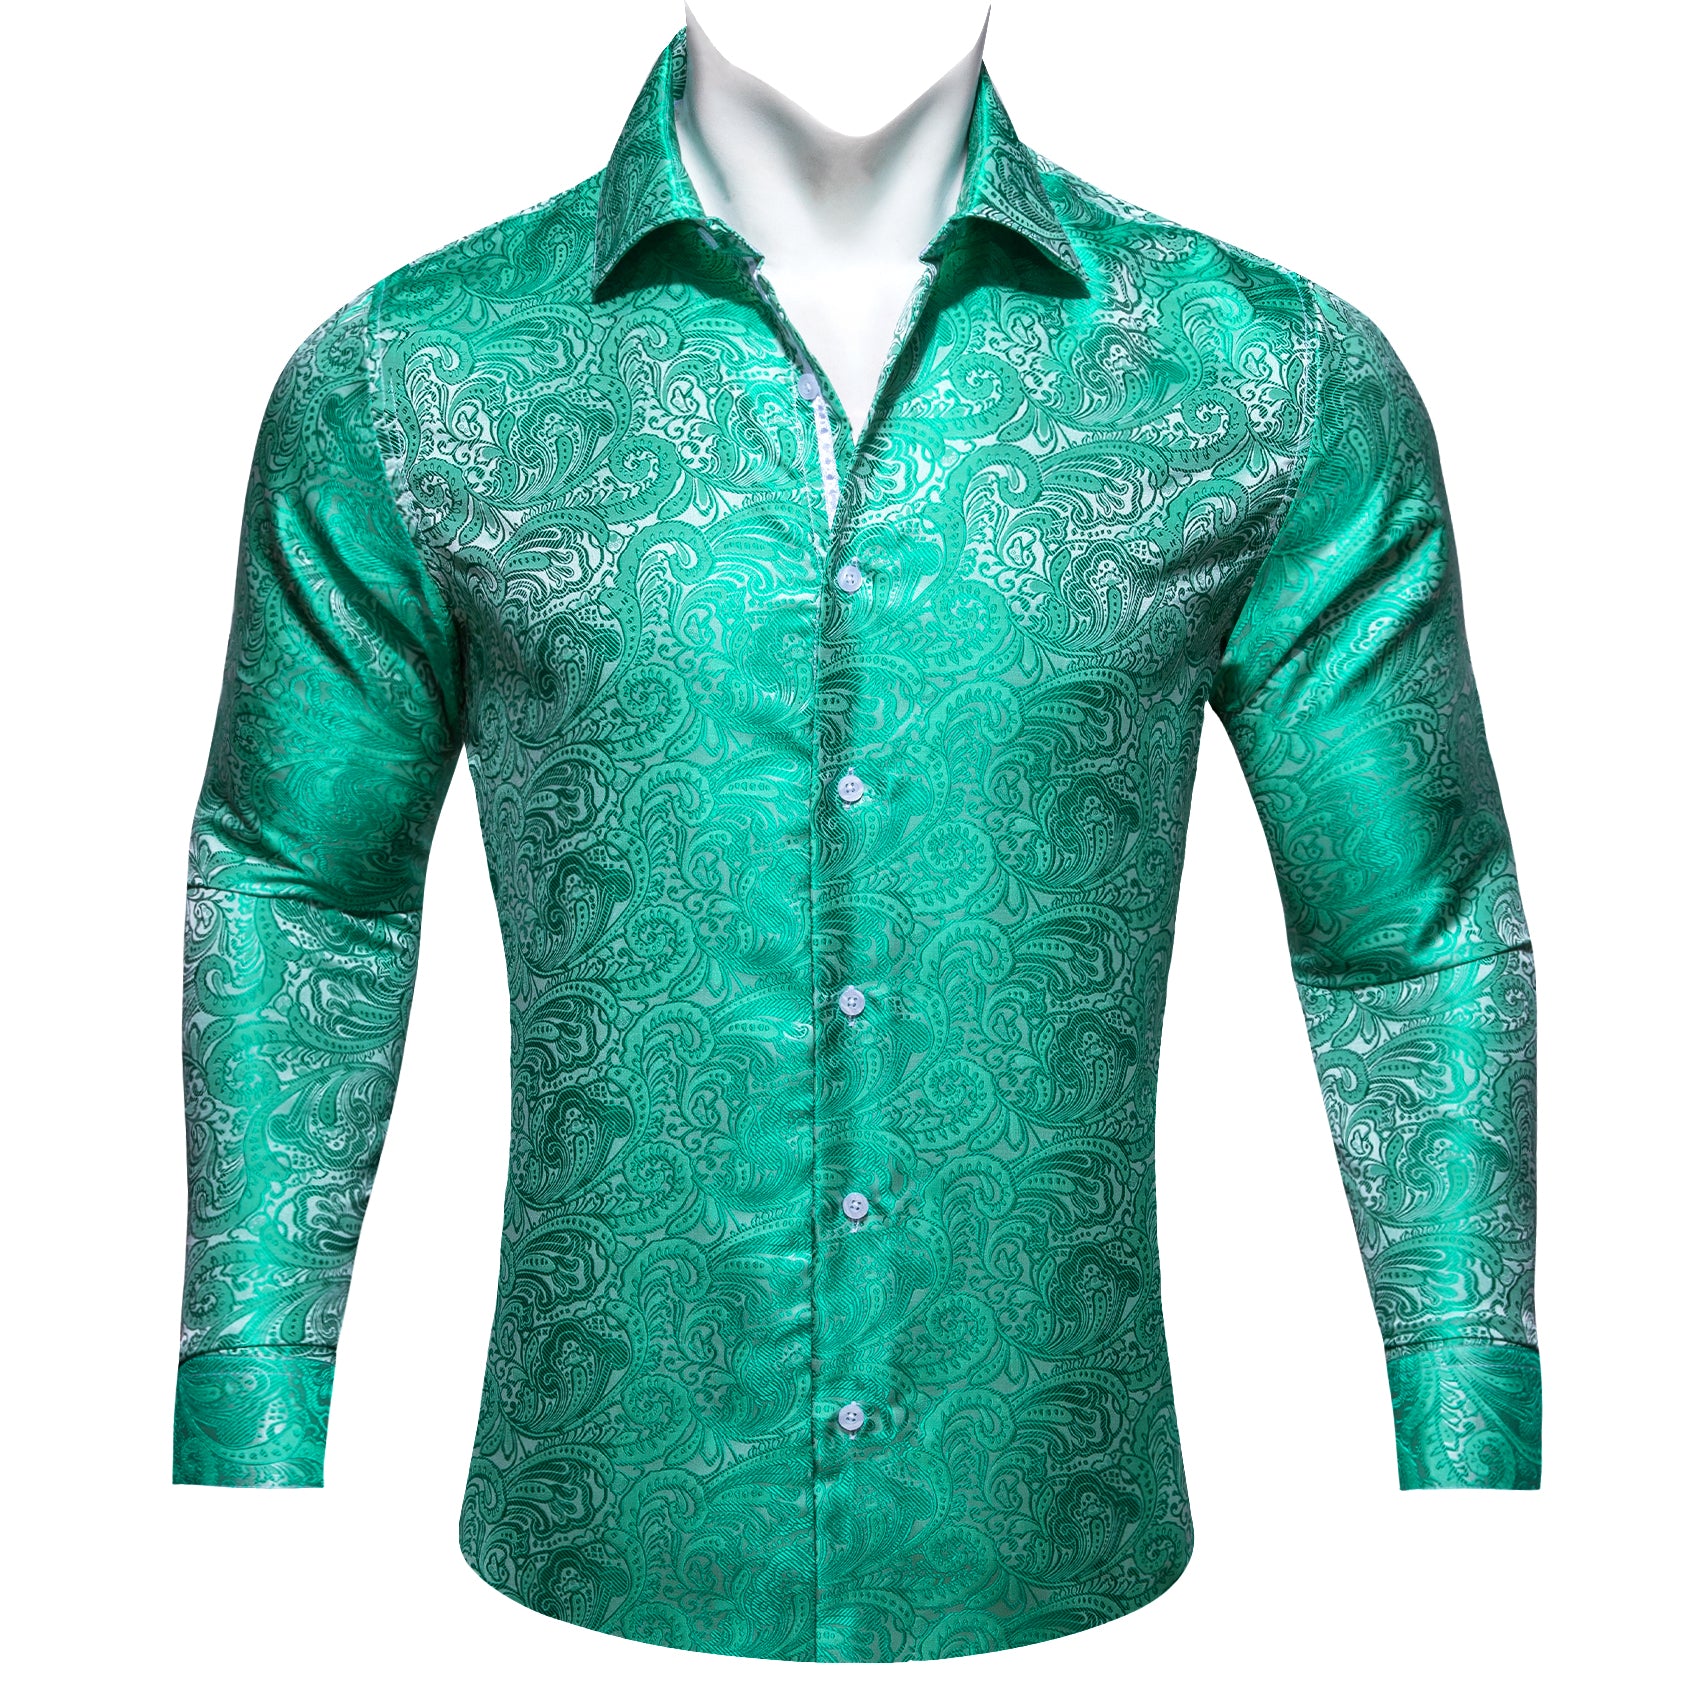 Barry.wang Green White Paisley Silk Men's Shirt